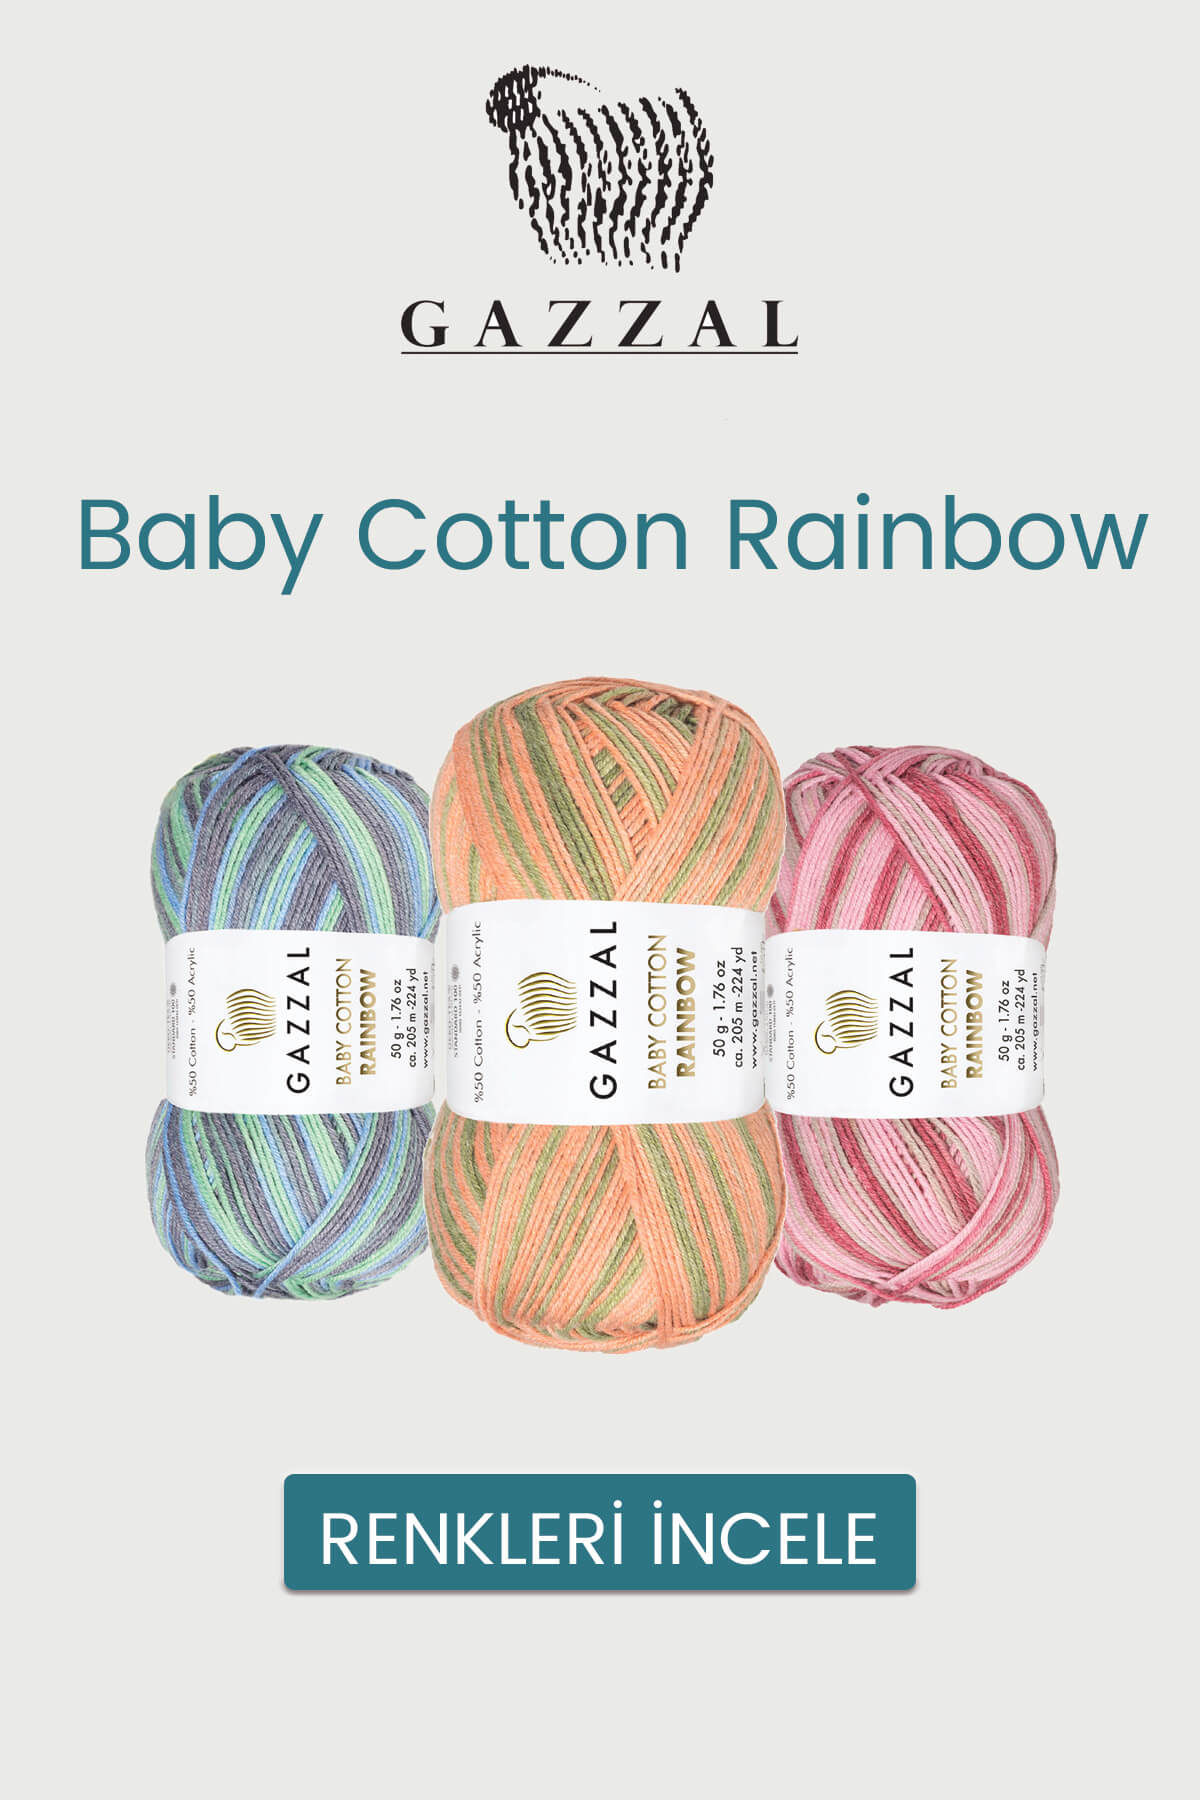 gazzal-baby-cotton-rainbow-tekstilland